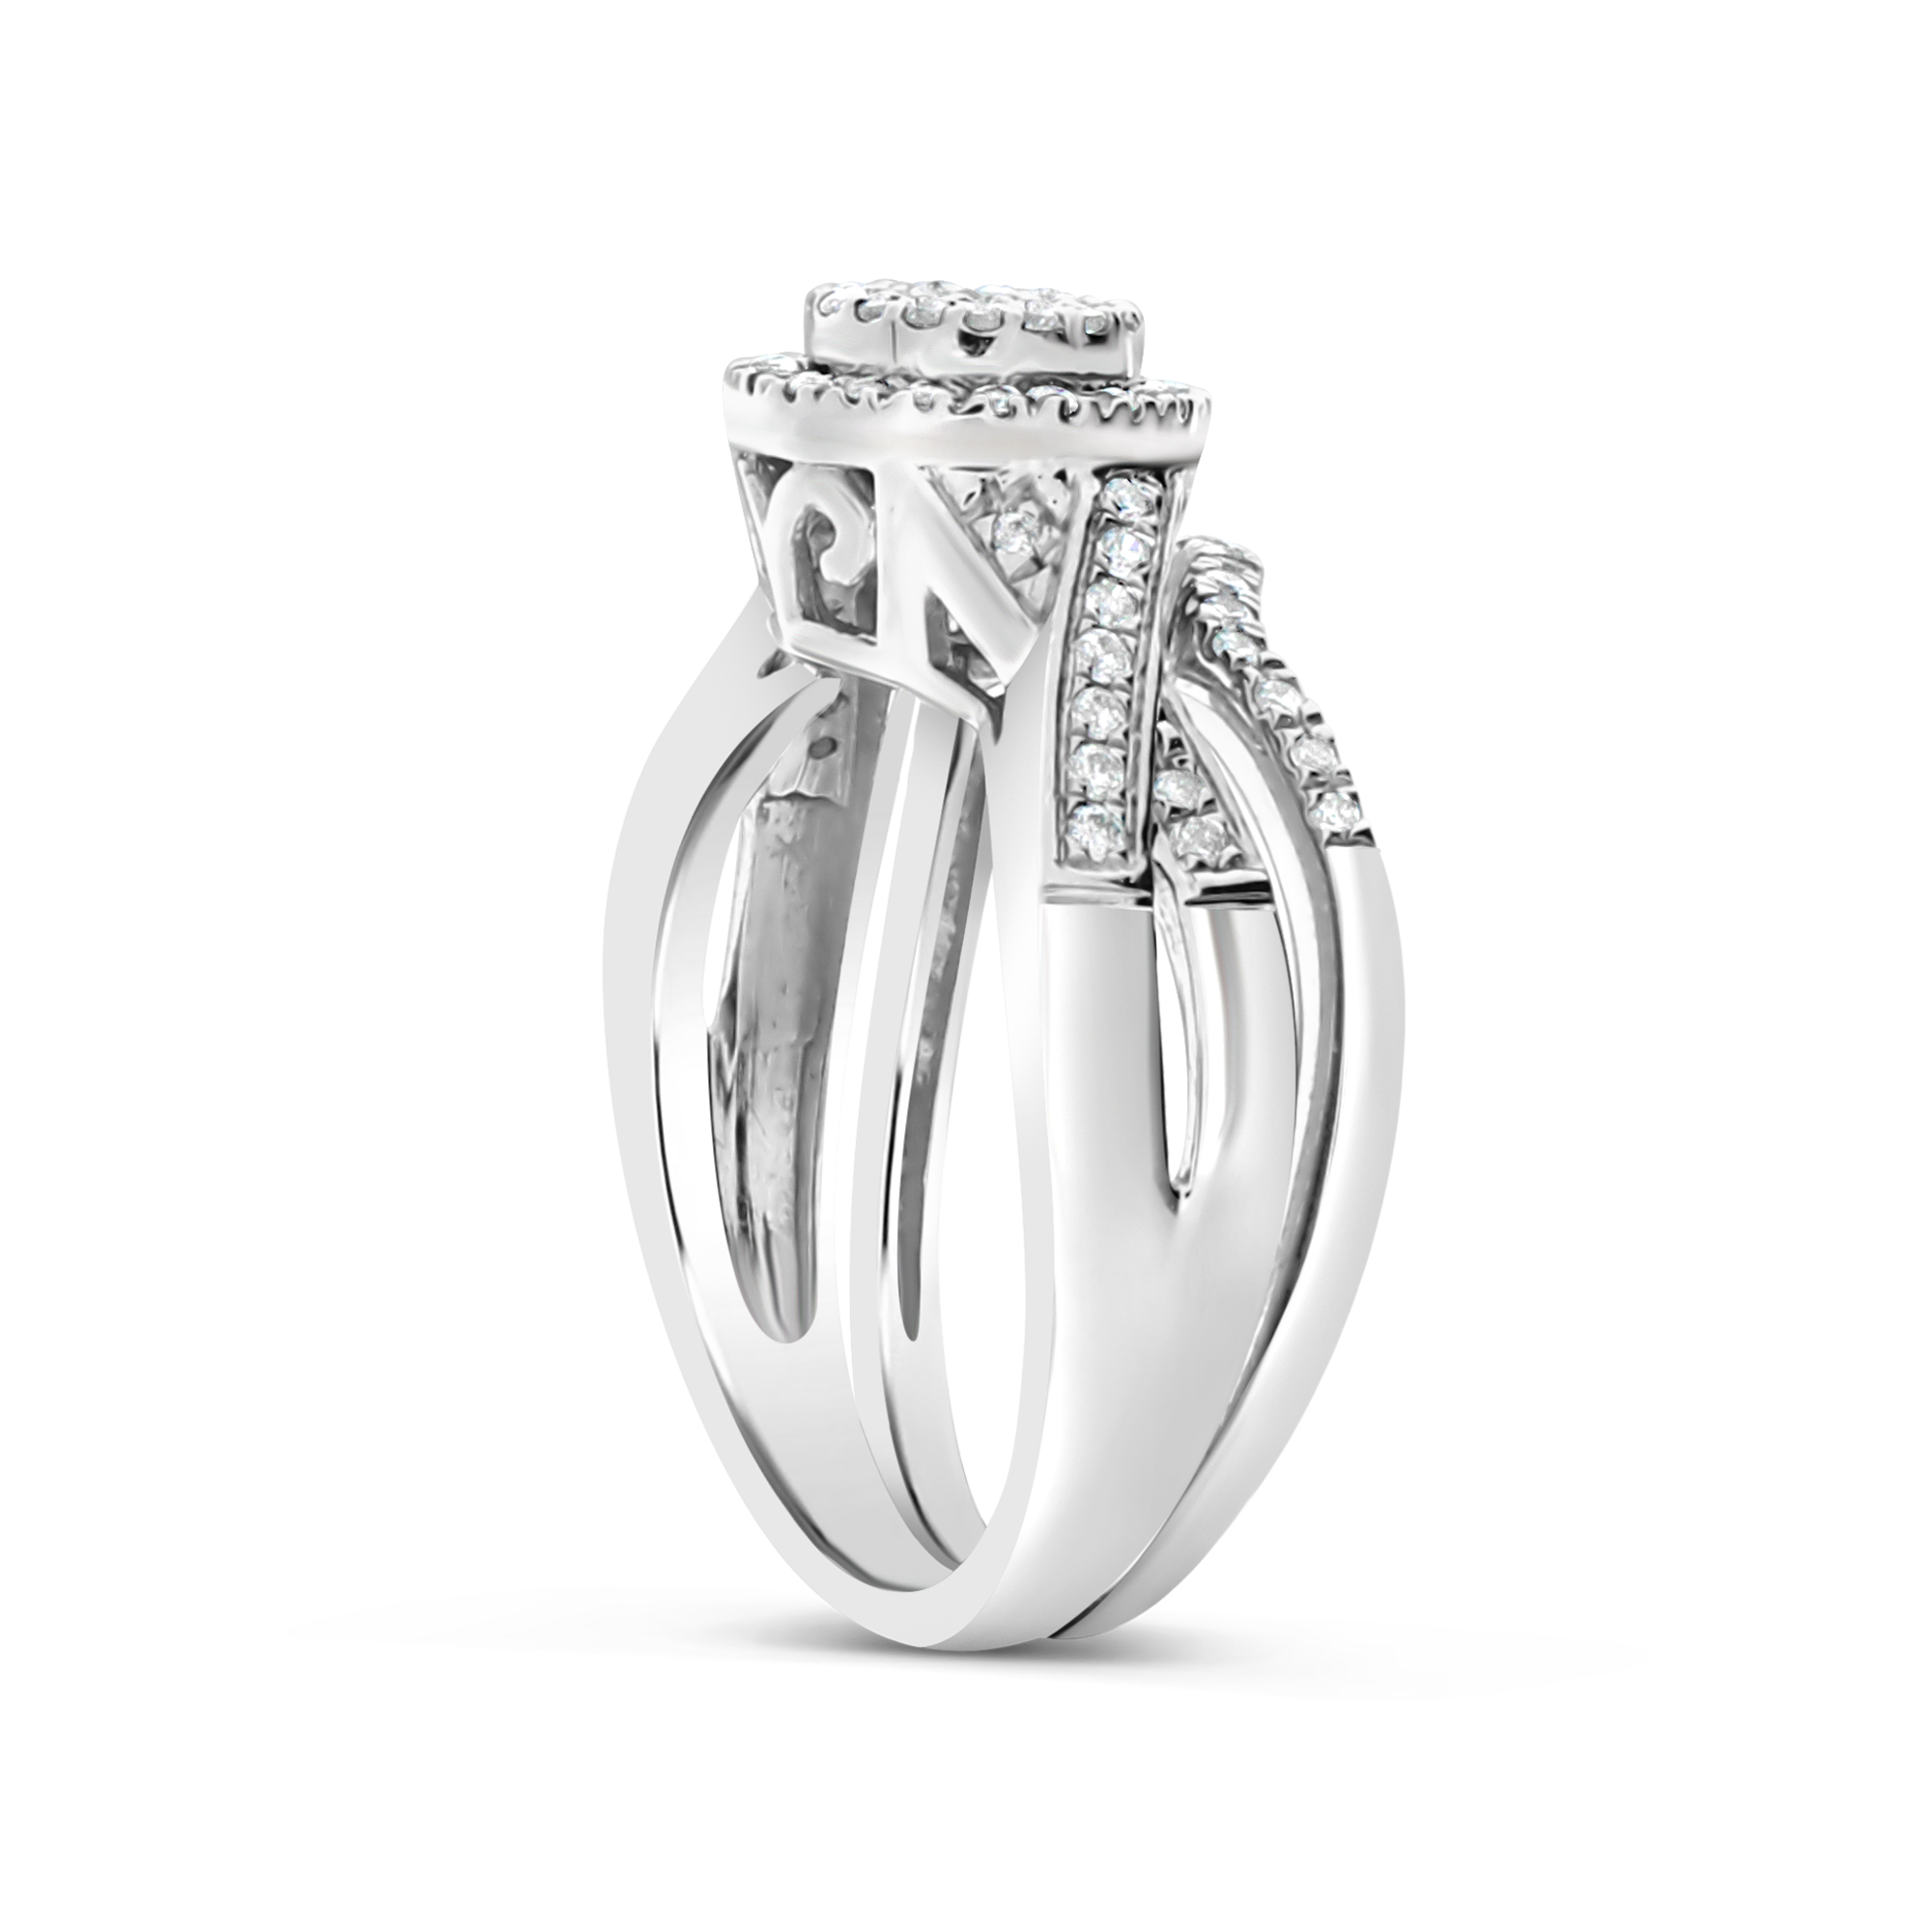 Diamond Halo Engagement Ring .40 CTW Round Cut 14k White Gold